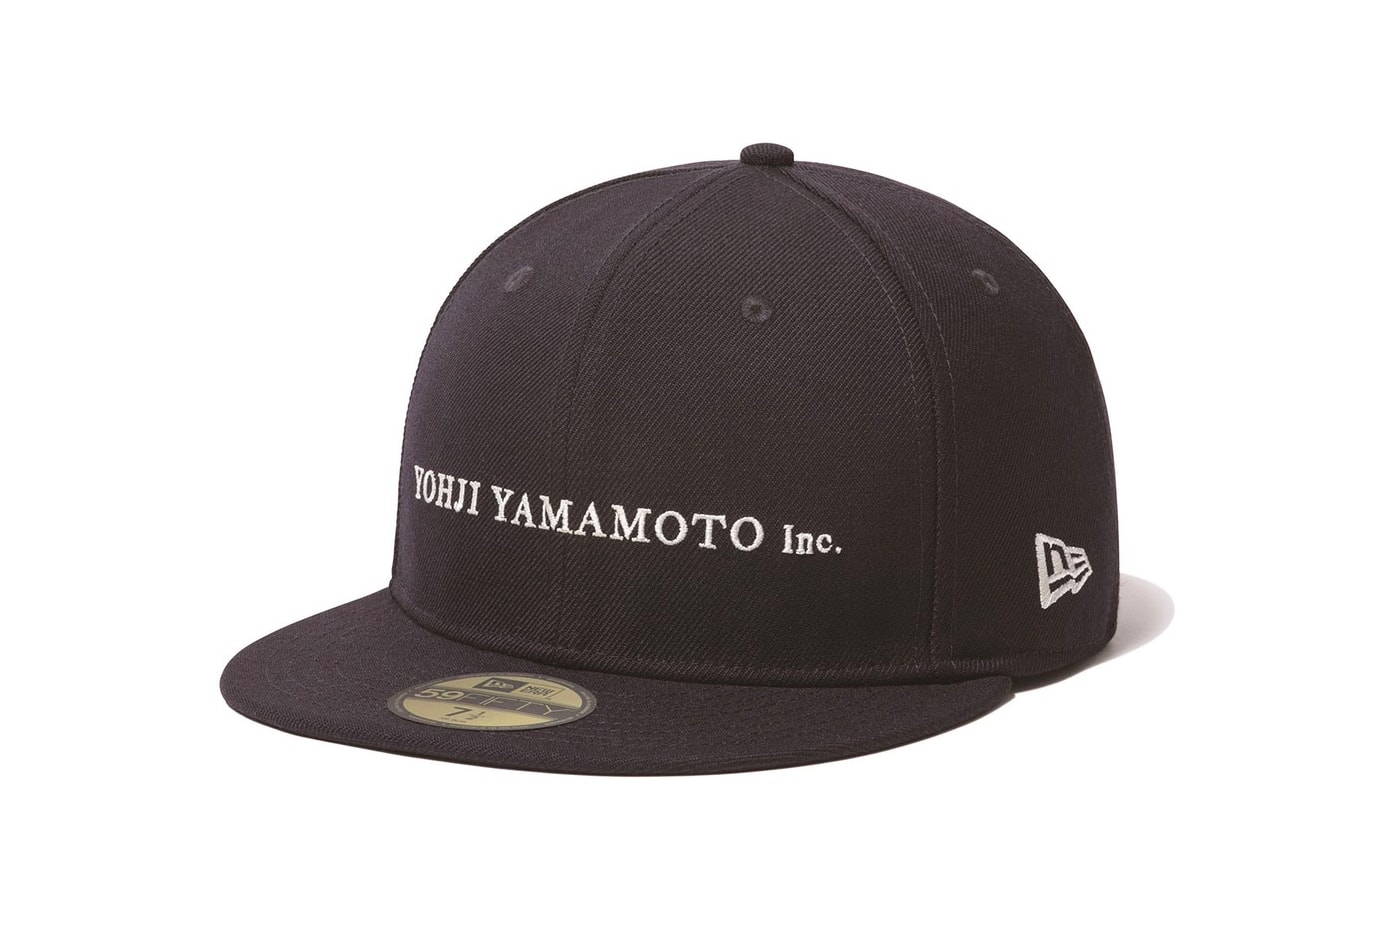 Yohji Yamamoto New Era 100th Anniversary Collaboration Special Package Release Info Buy Date Price 